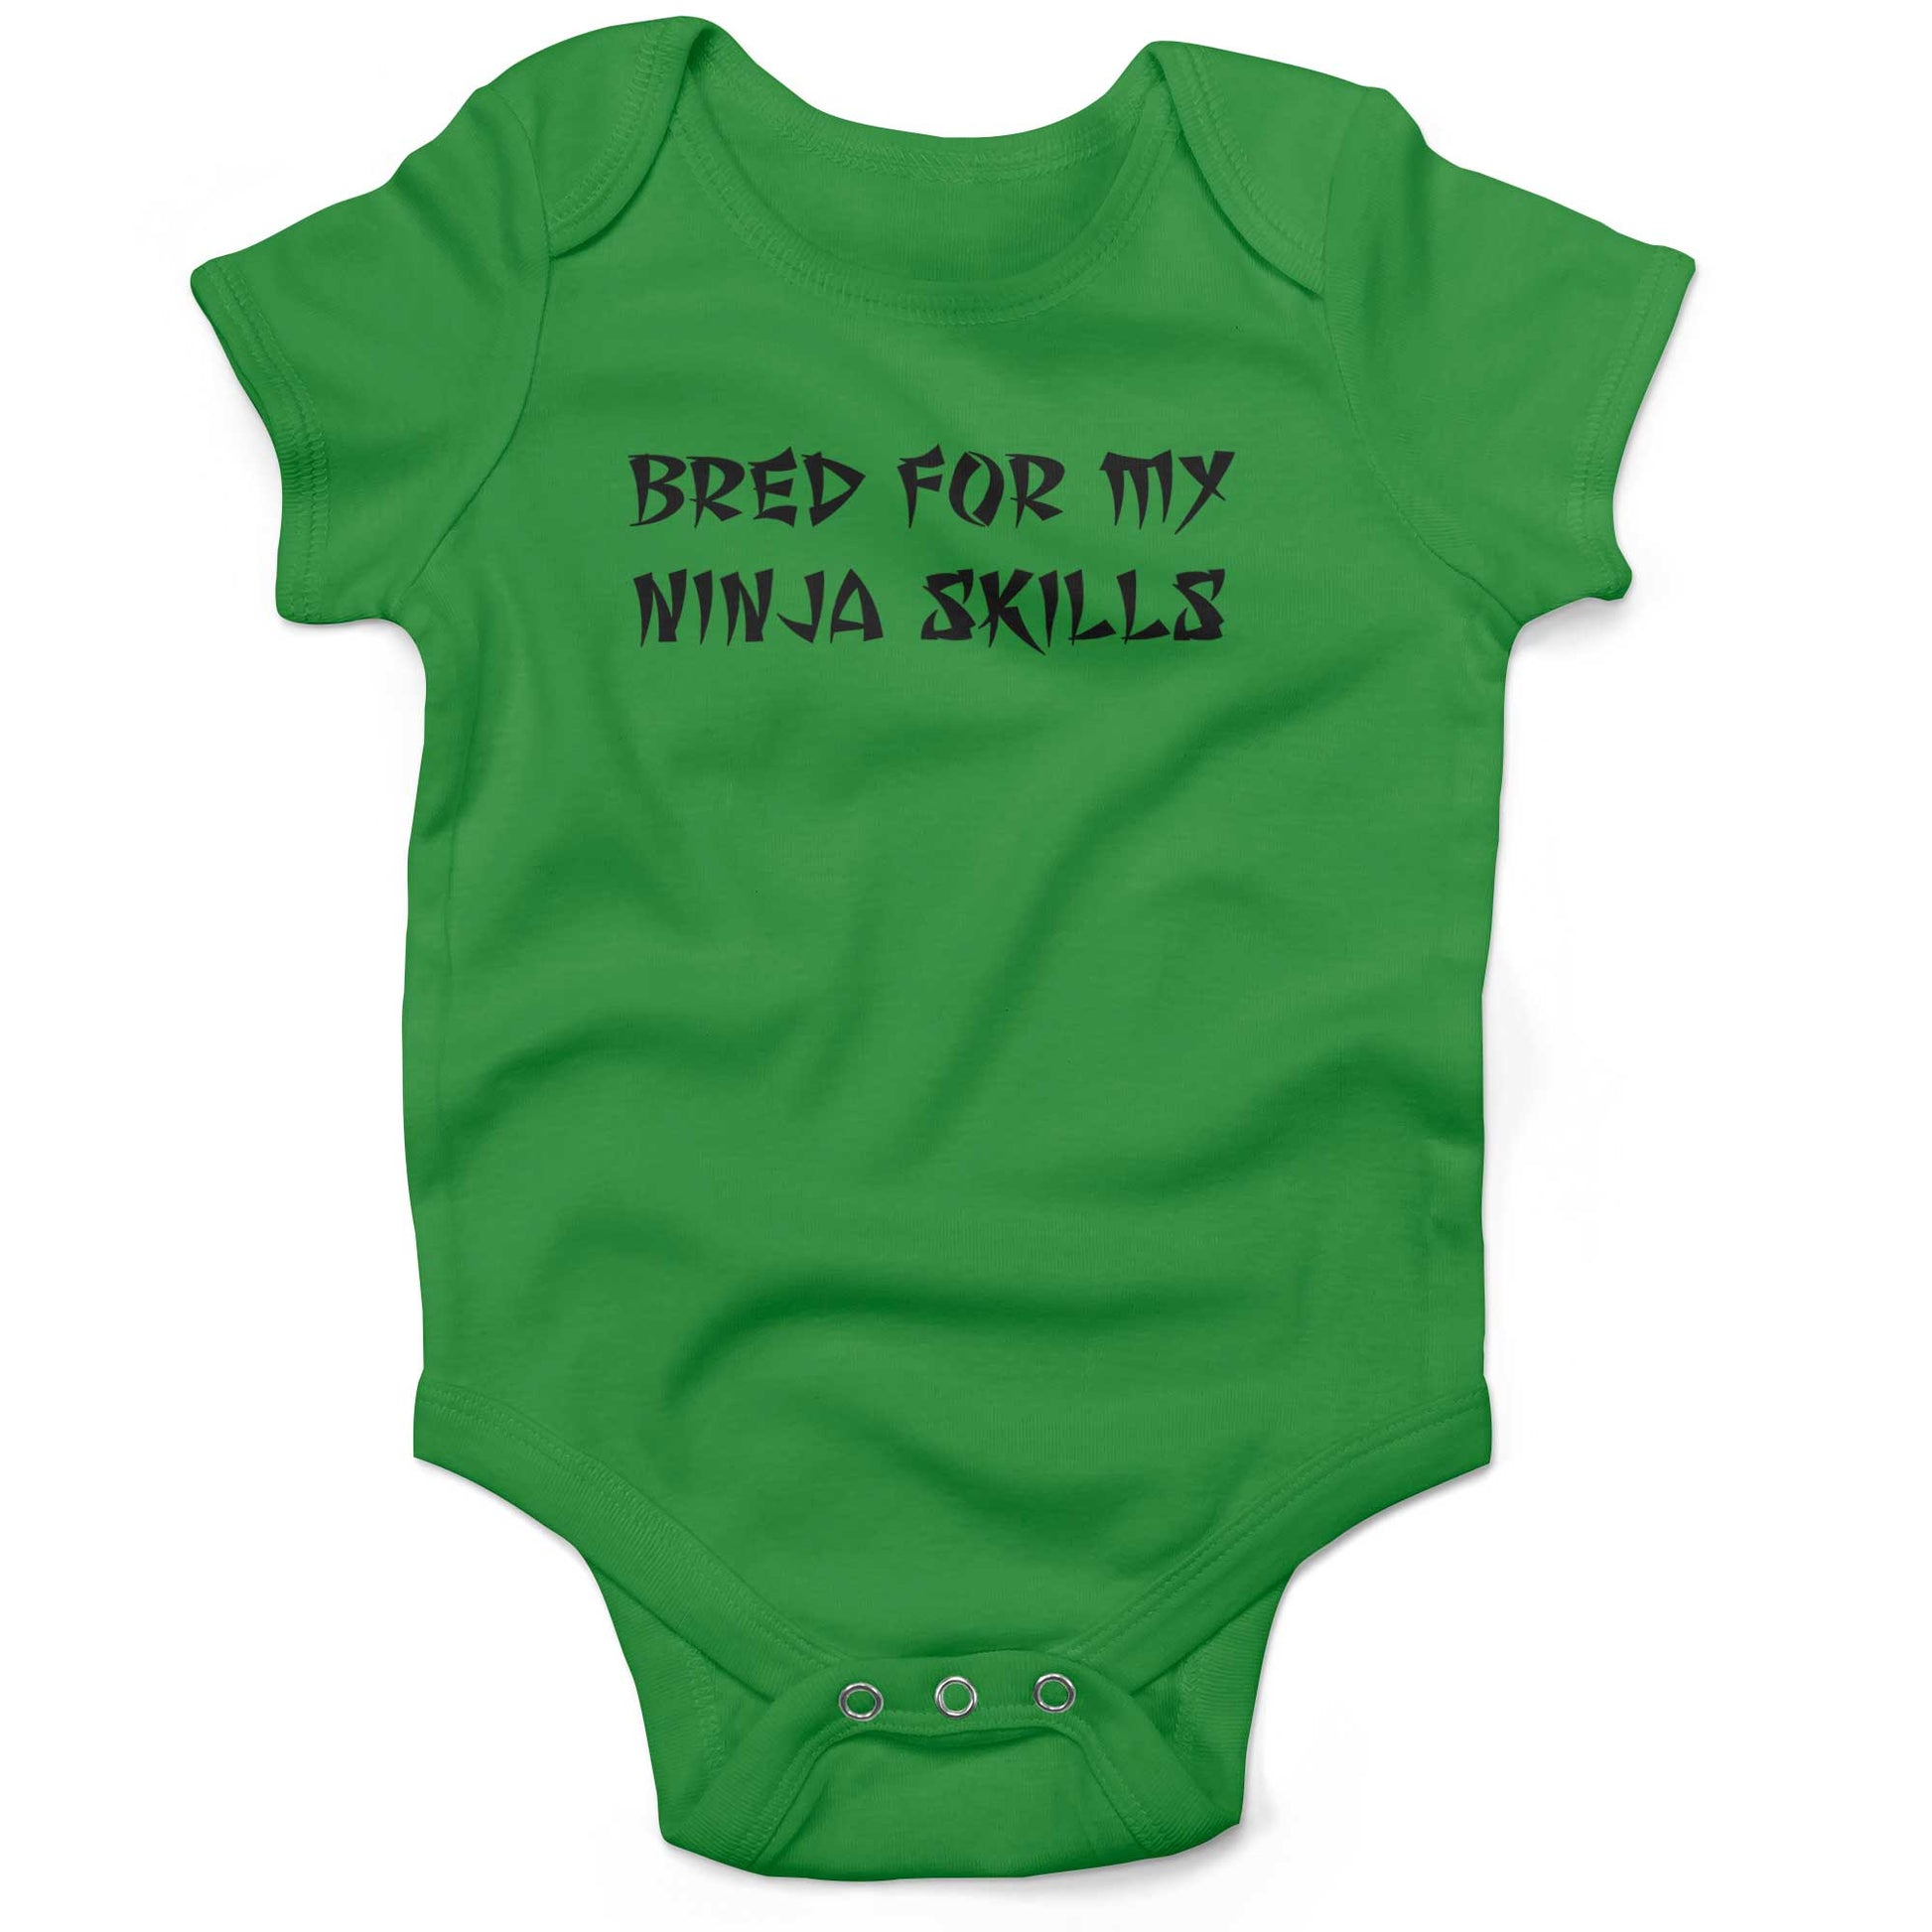 Bred For My Ninja Skills Infant Bodysuit or Raglan Baby Tee-Grass Green-3-6 months